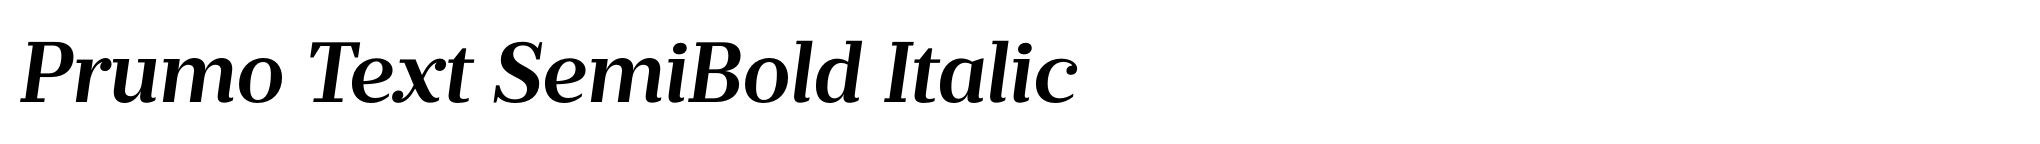 Prumo Text SemiBold Italic image